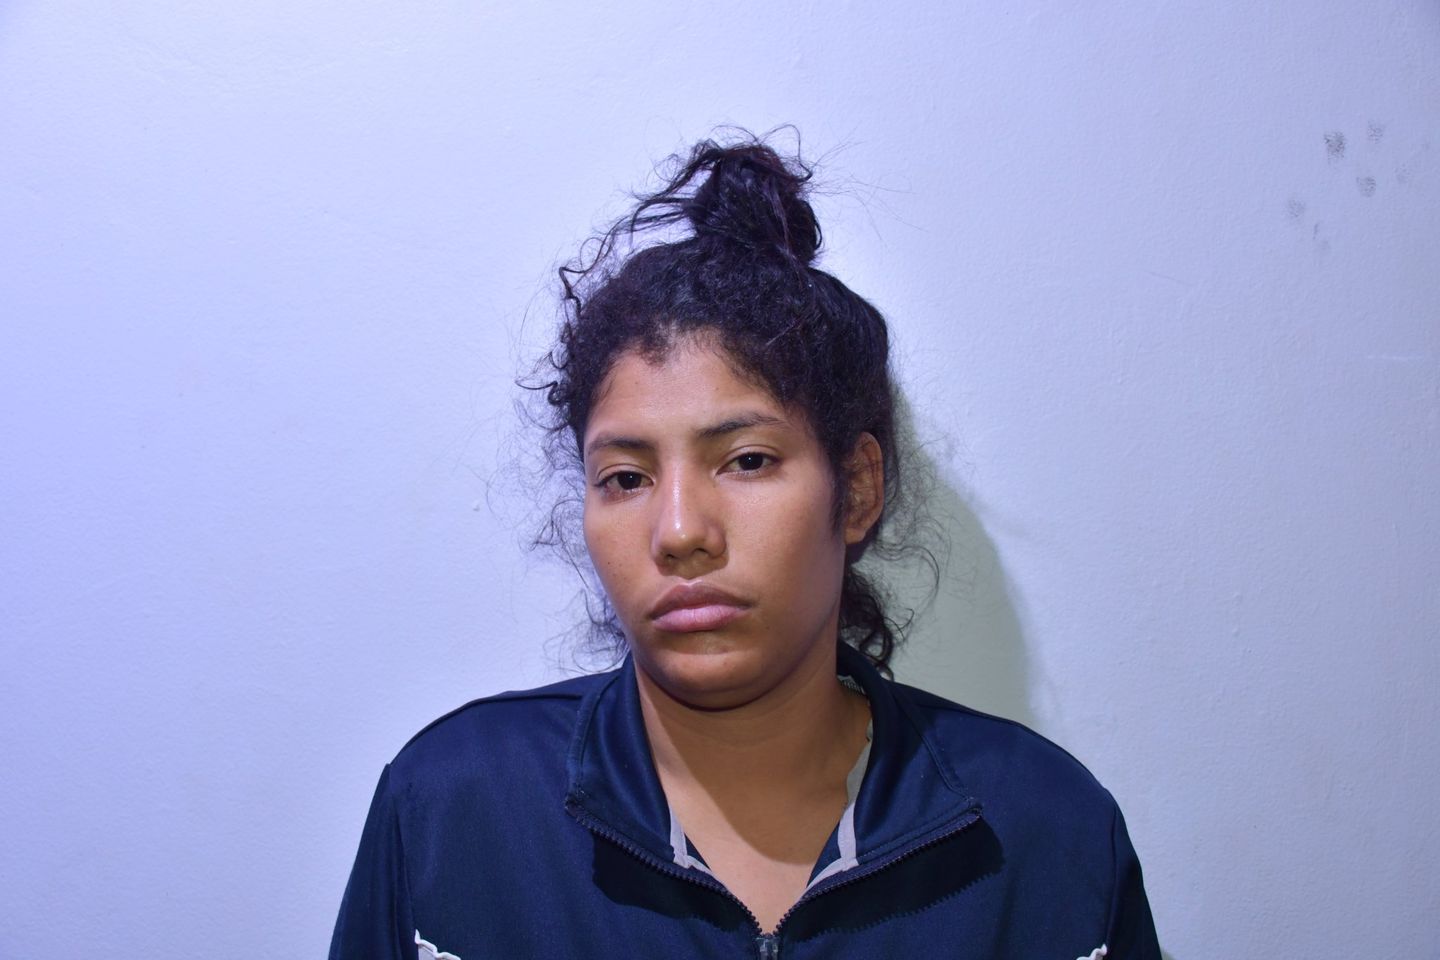 Venezuelan woman denied bail for human trafficking offences